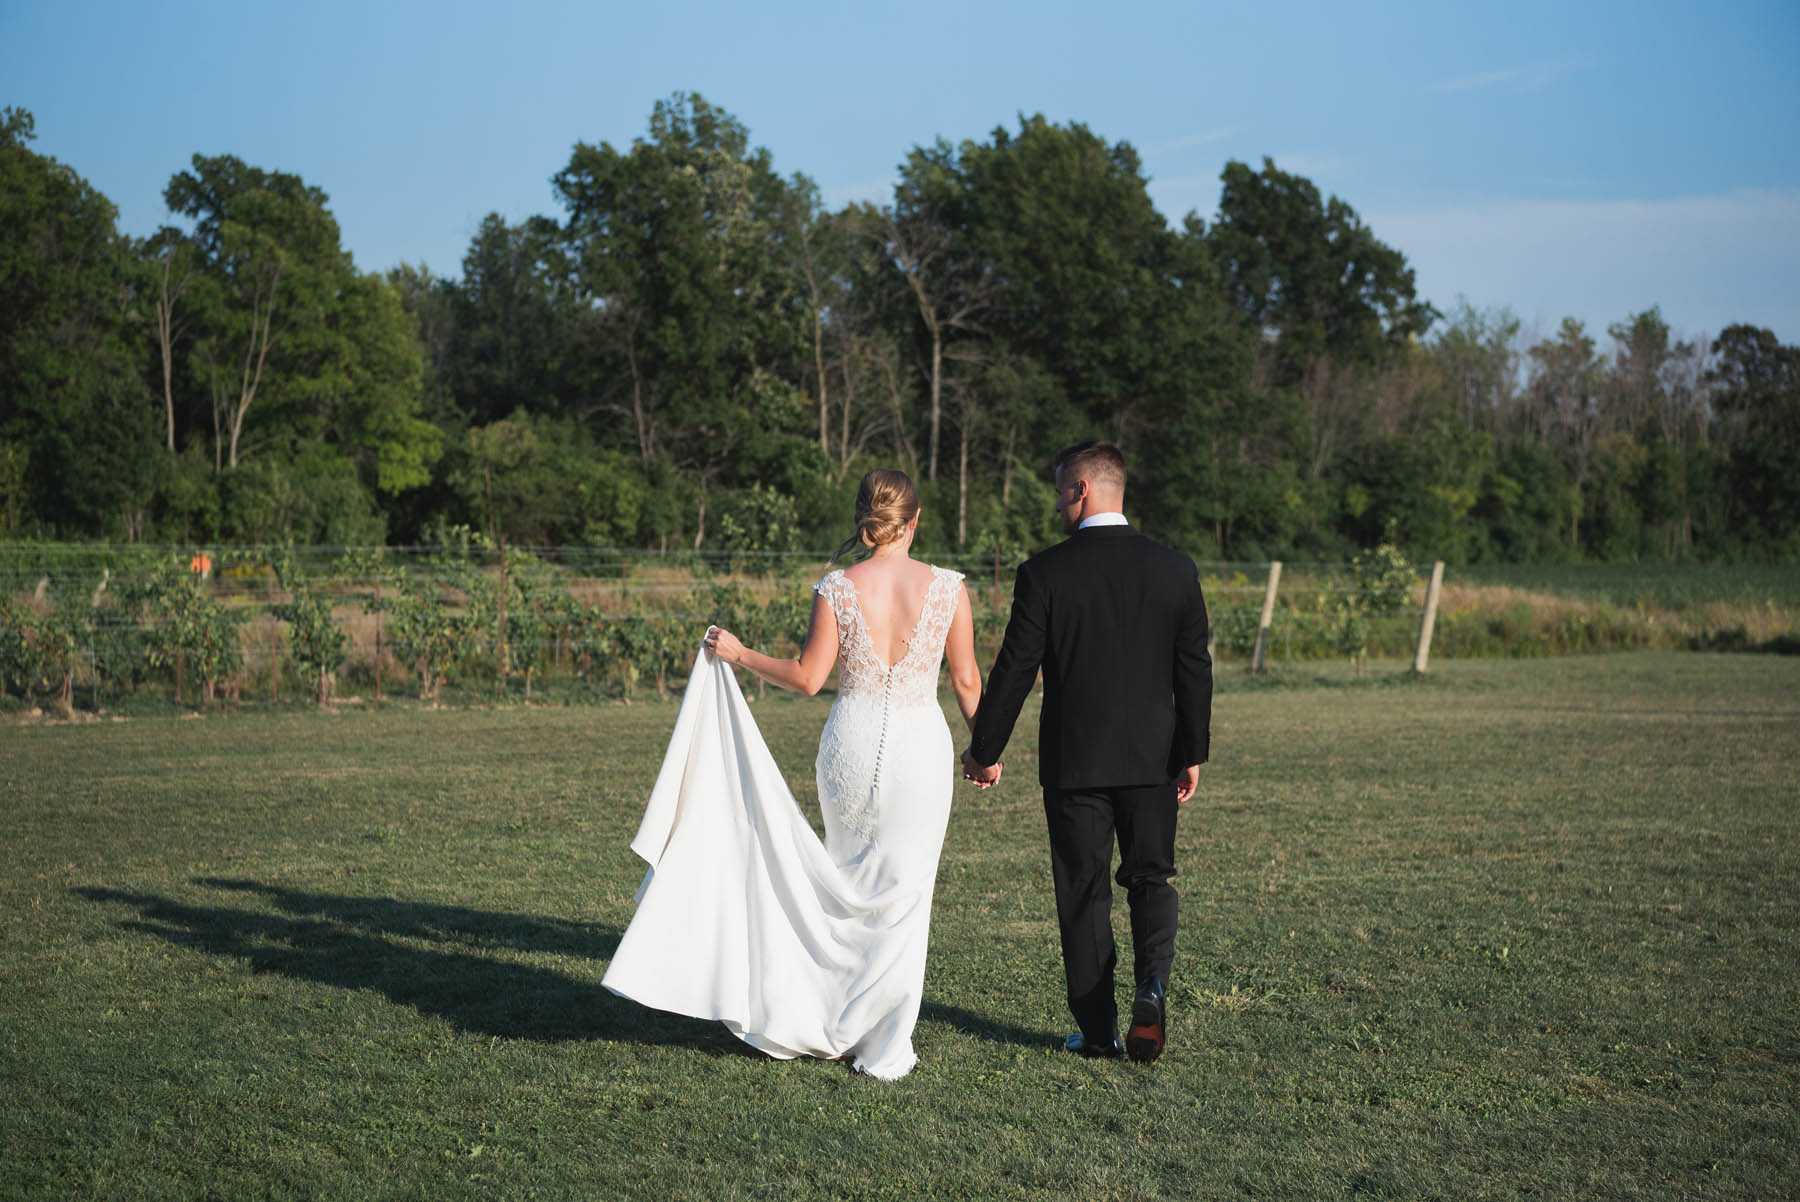 Magical Wedding Photography by a Seasoned Photographer - Samantha + Tyler